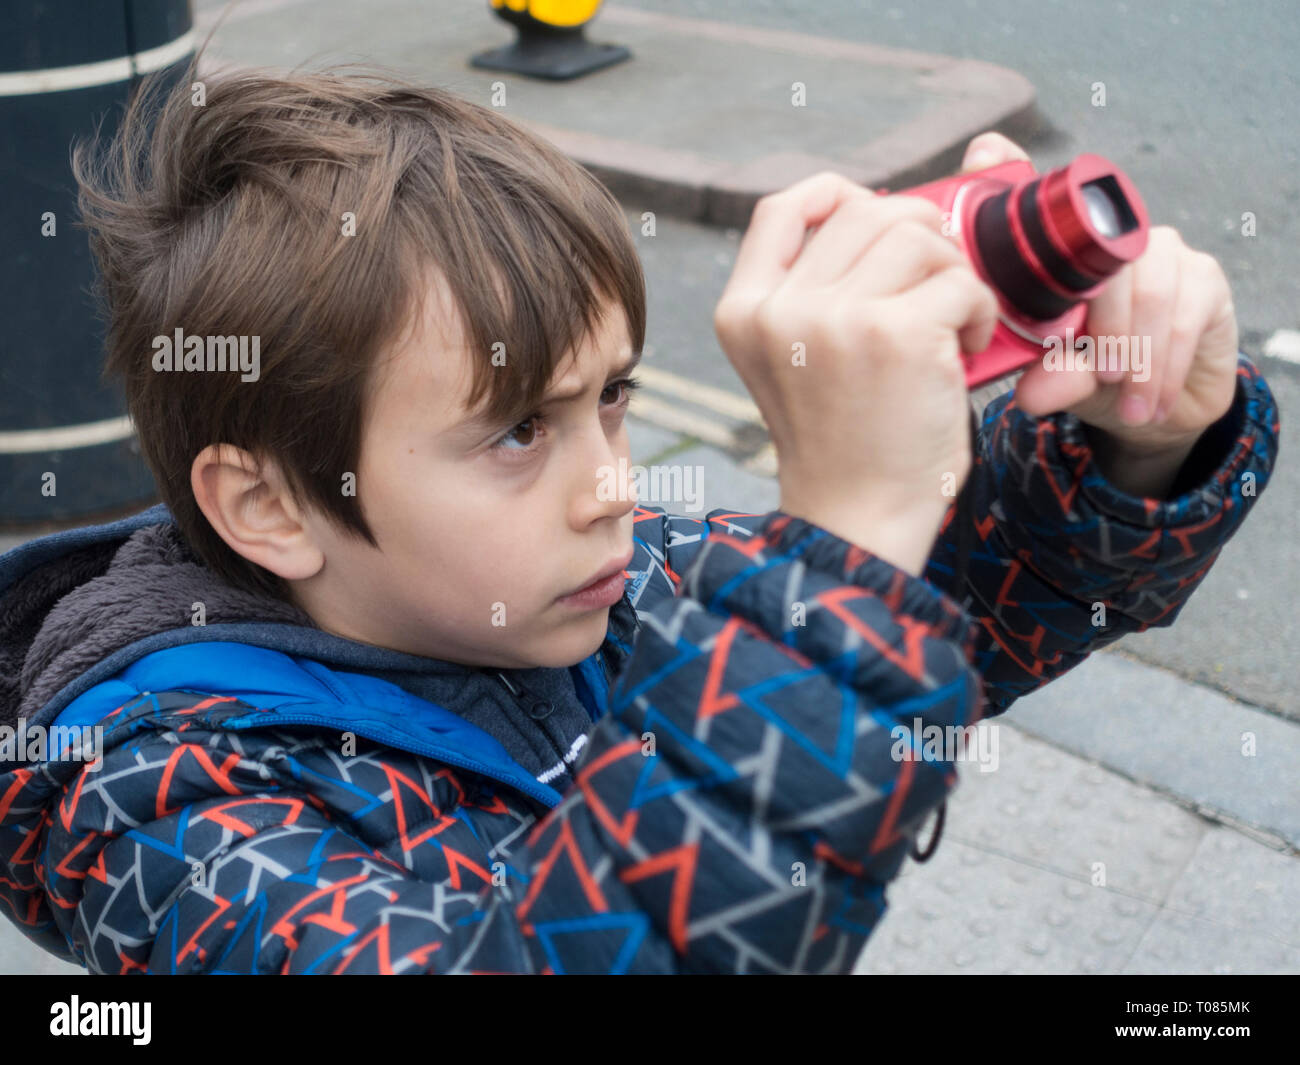 Child Photographer Stock Photo